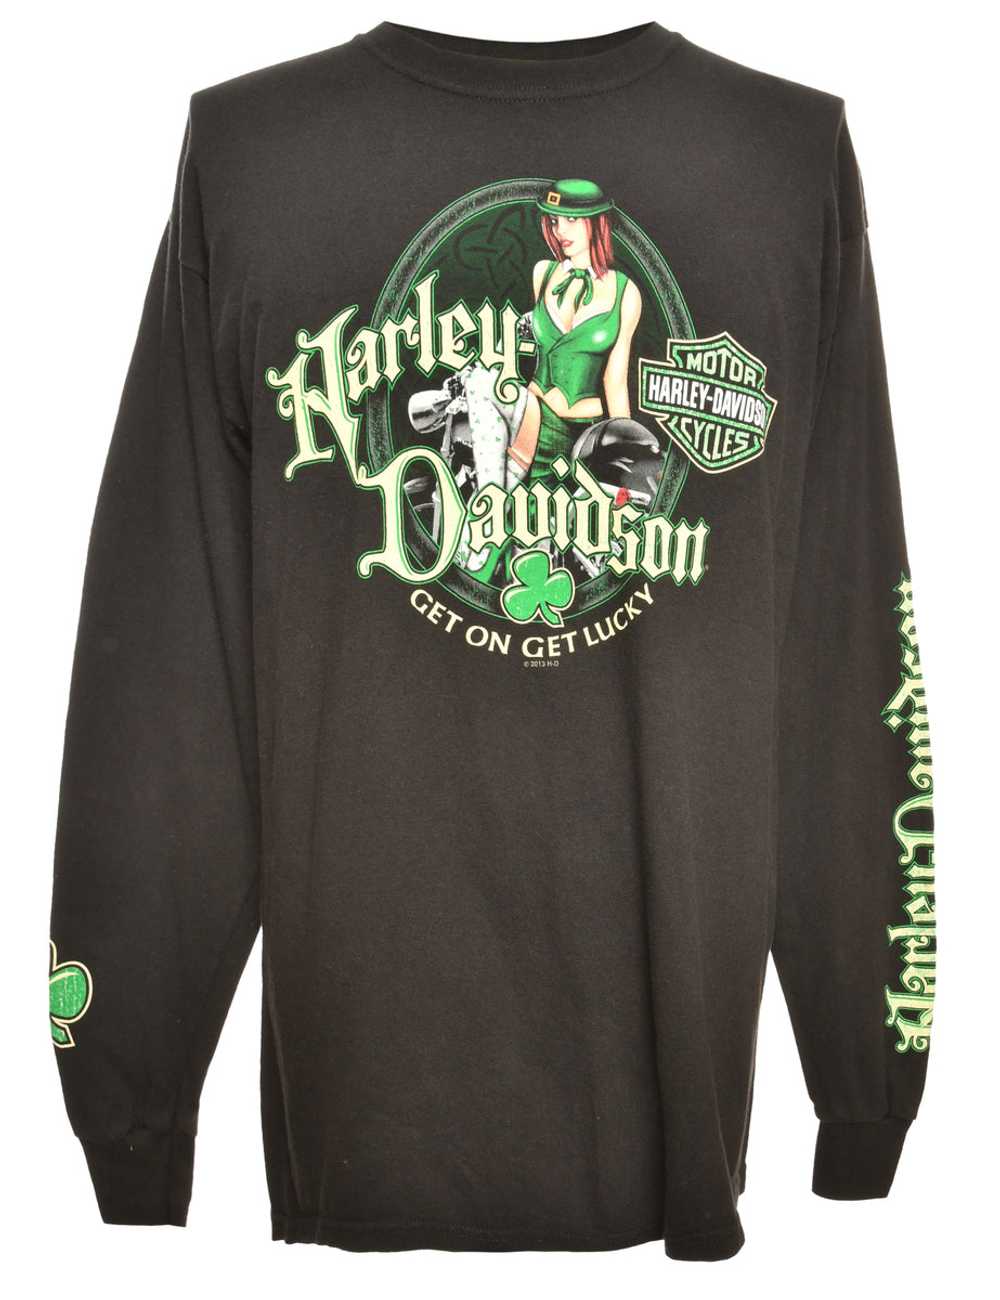 Harley Davidson Printed T-shirt - M - image 1